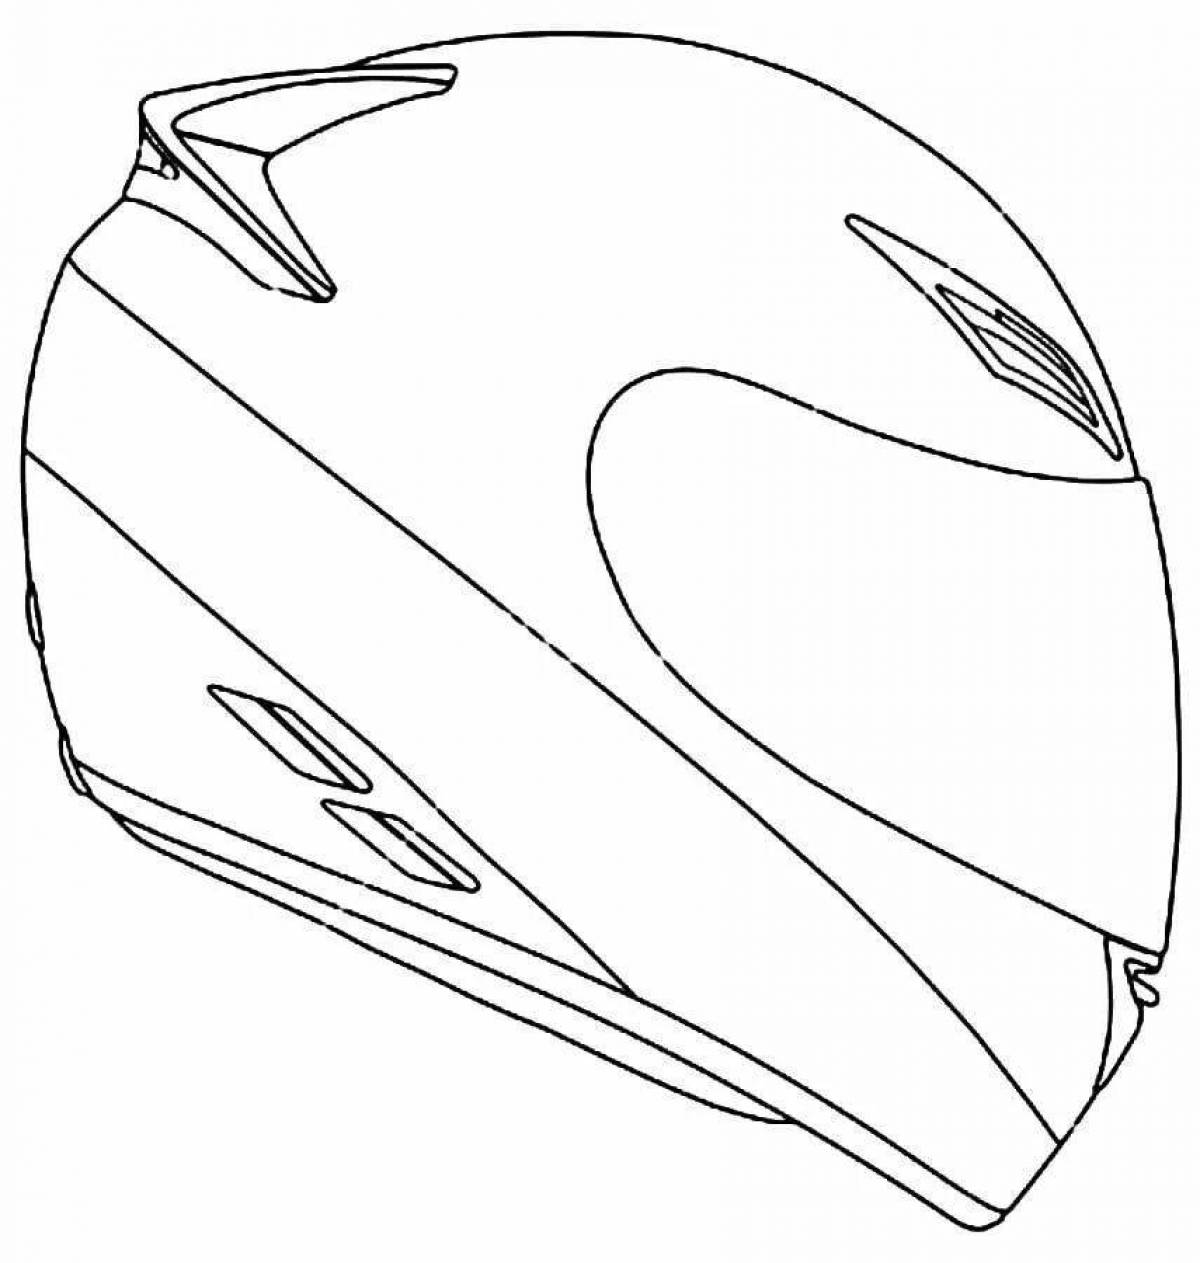 Fun helmet coloring page